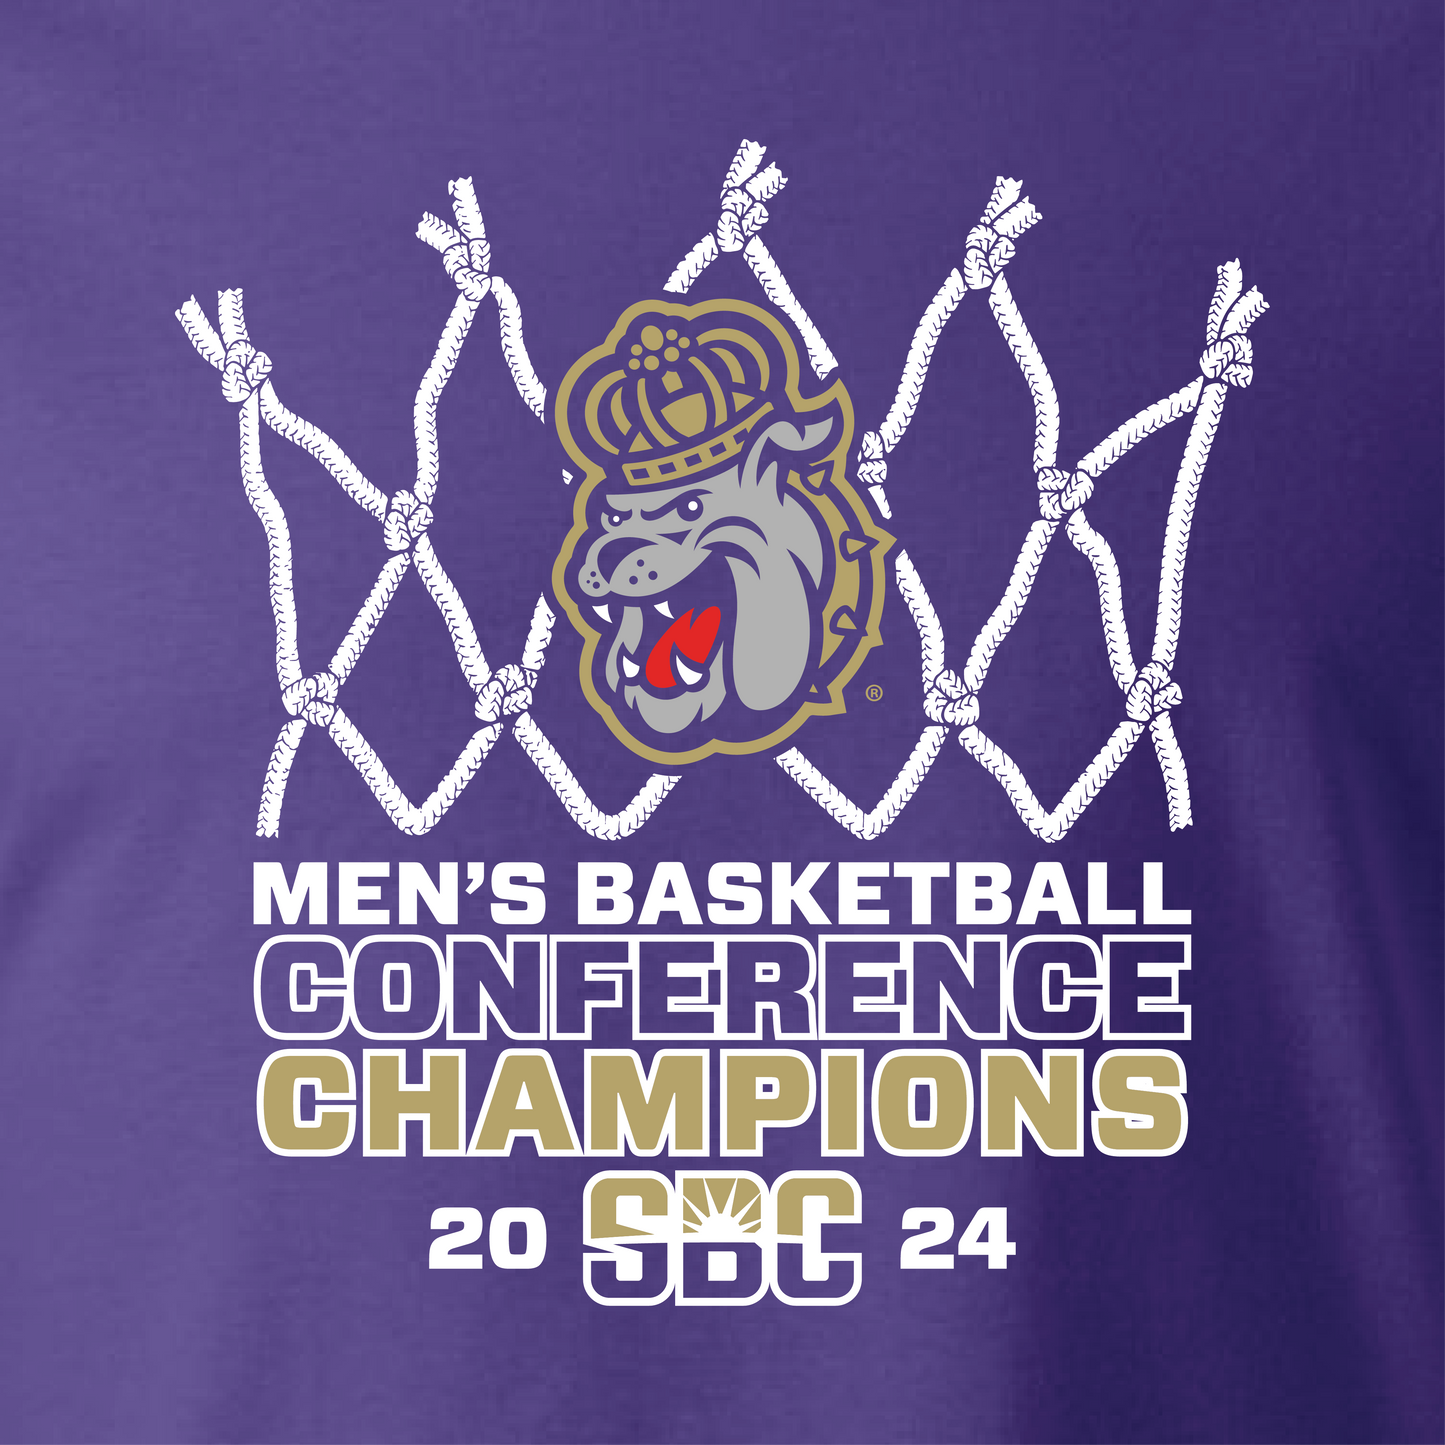 JMU Men's Basketball SBC Champions T-Shirt